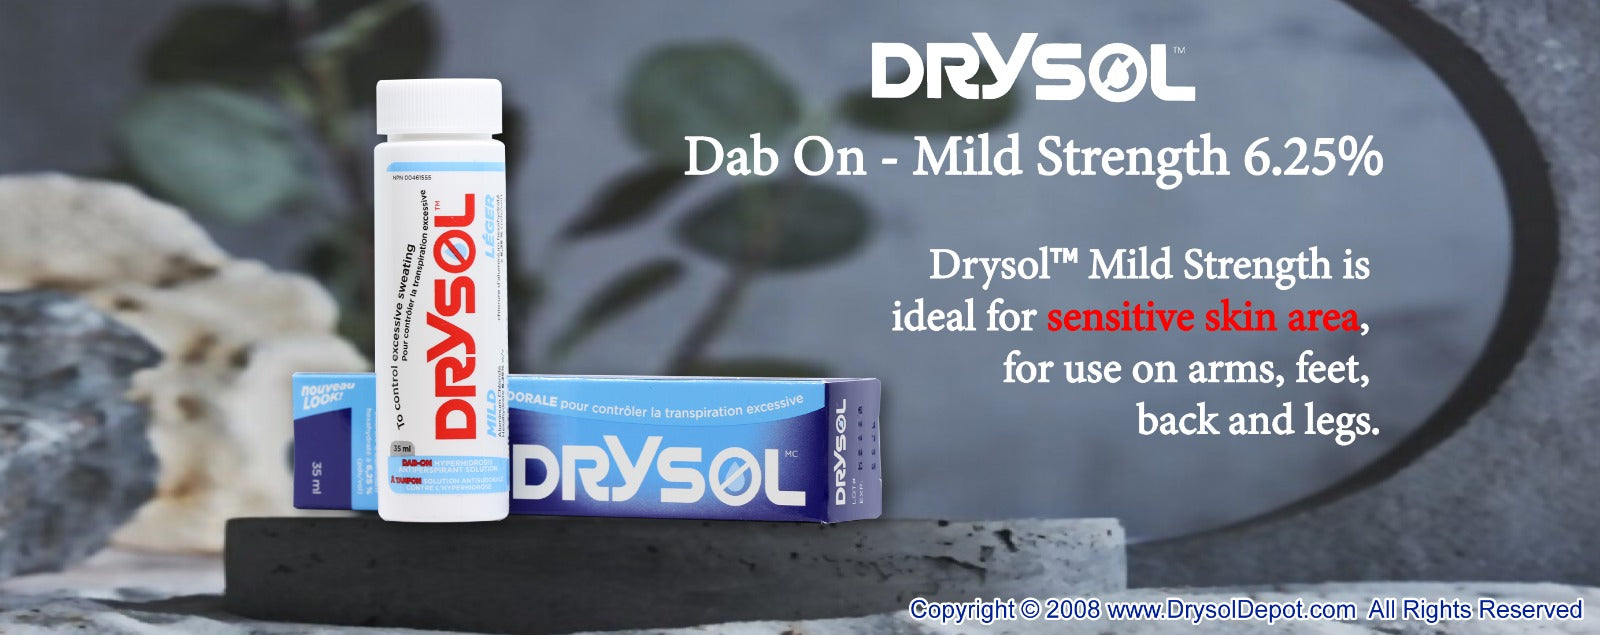 Drysol Dab On Mild Strength 6.25% - Shop at DrysolDepot.com